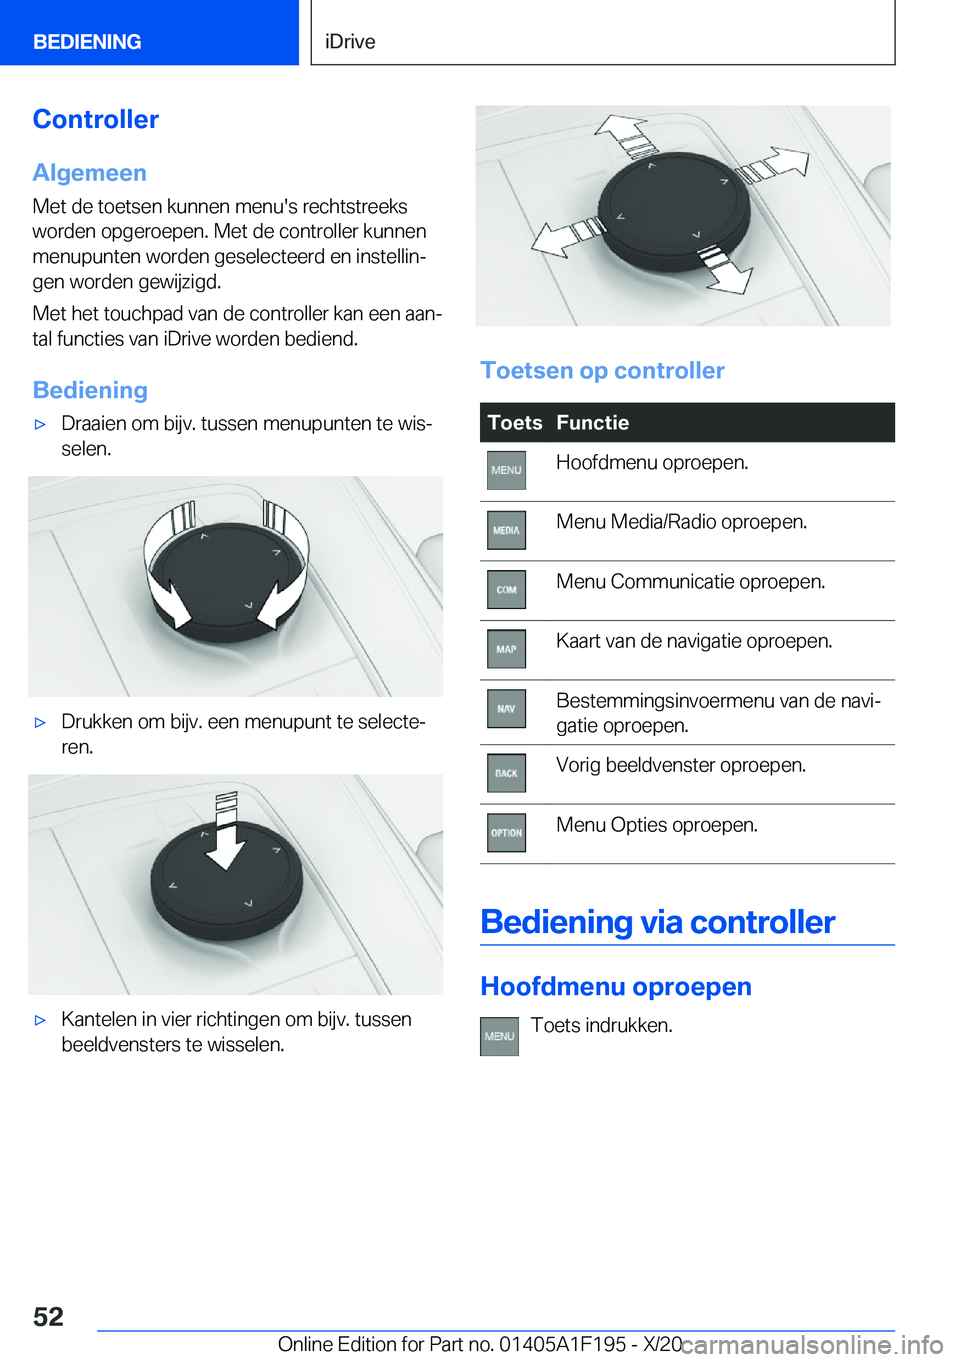 BMW M5 2021  Instructieboekjes (in Dutch) �C�o�n�t�r�o�l�l�e�r�A�l�g�e�m�e�e�n
�M�e�t��d�e��t�o�e�t�s�e�n��k�u�n�n�e�n��m�e�n�u�'�s��r�e�c�h�t�s�t�r�e�e�k�s
�w�o�r�d�e�n��o�p�g�e�r�o�e�p�e�n�.��M�e�t��d�e��c�o�n�t�r�o�l�l�e�r��k